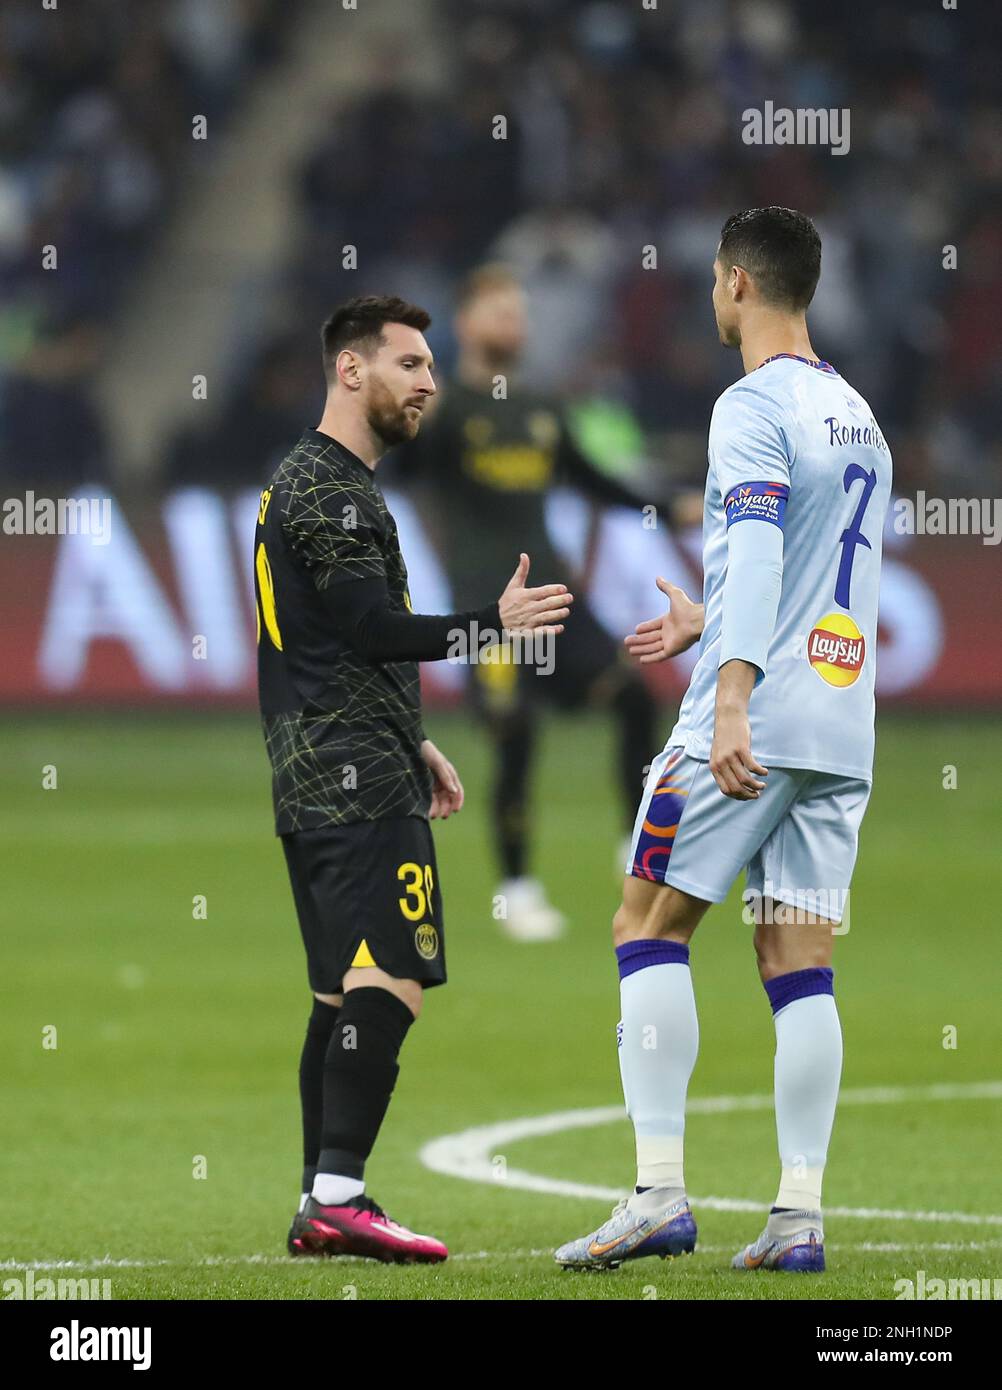 Picture Proof Lionel Messi And Cristiano Ronaldo Are Good Friends? 